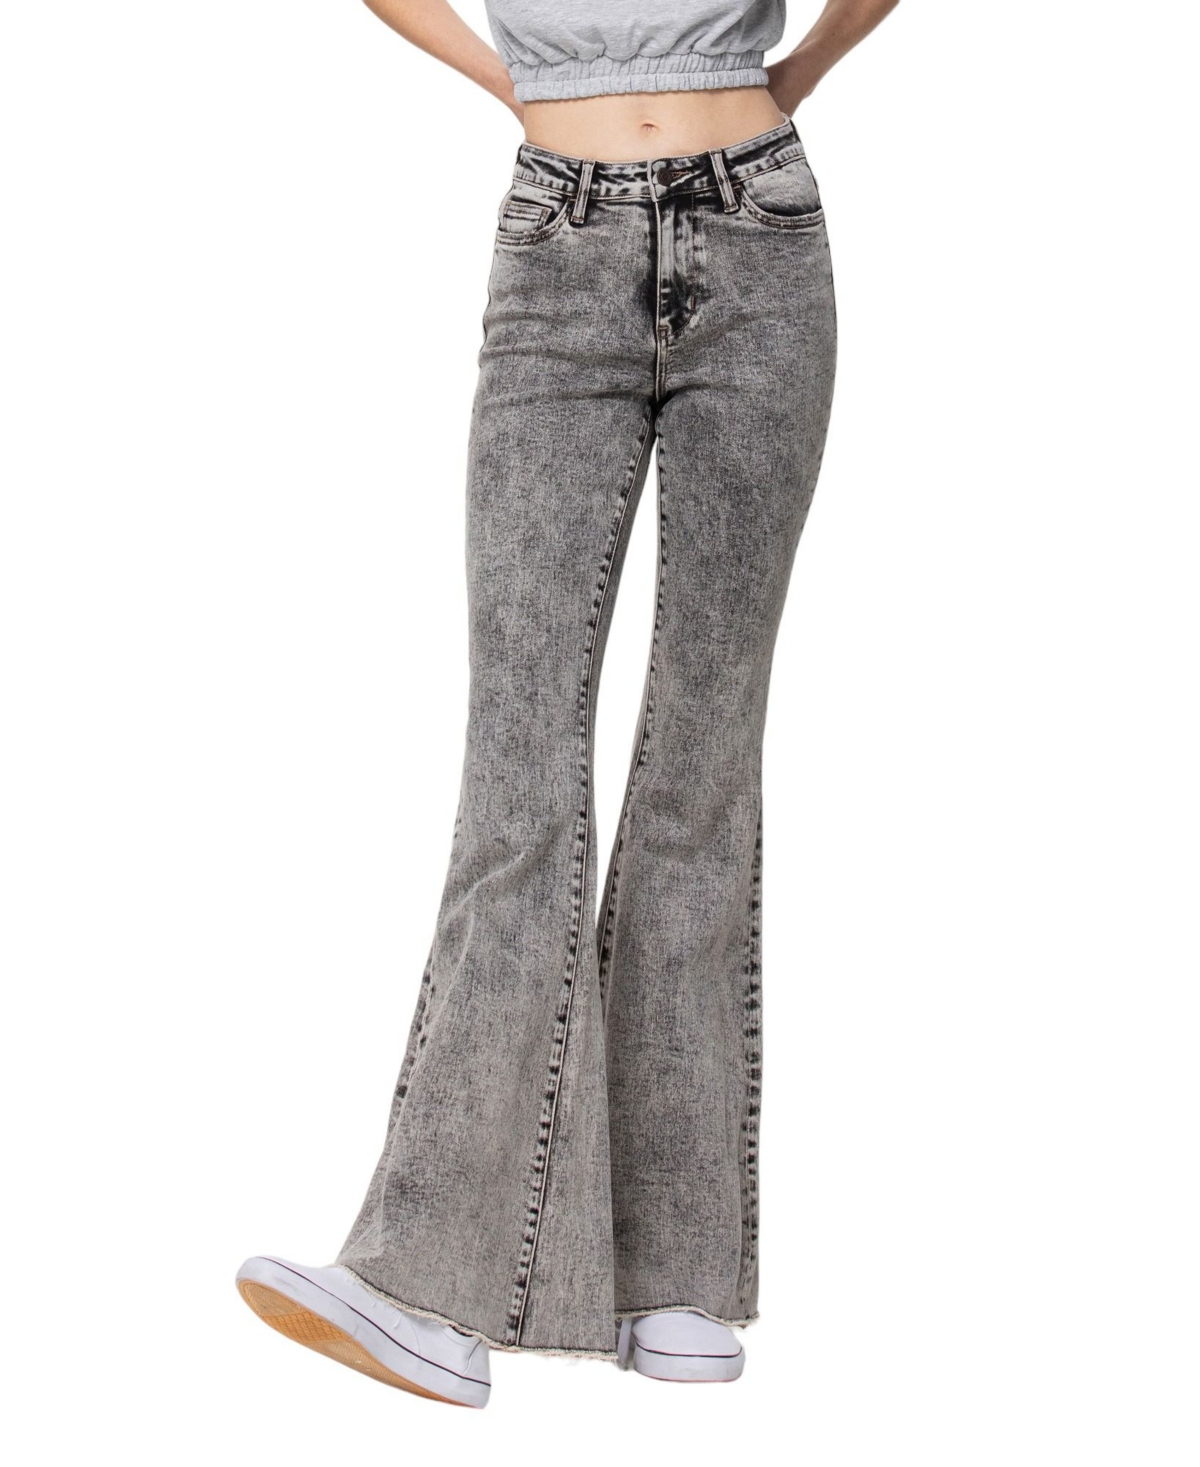 Women's High Rise Flare Jeans - Lady sleeps grey